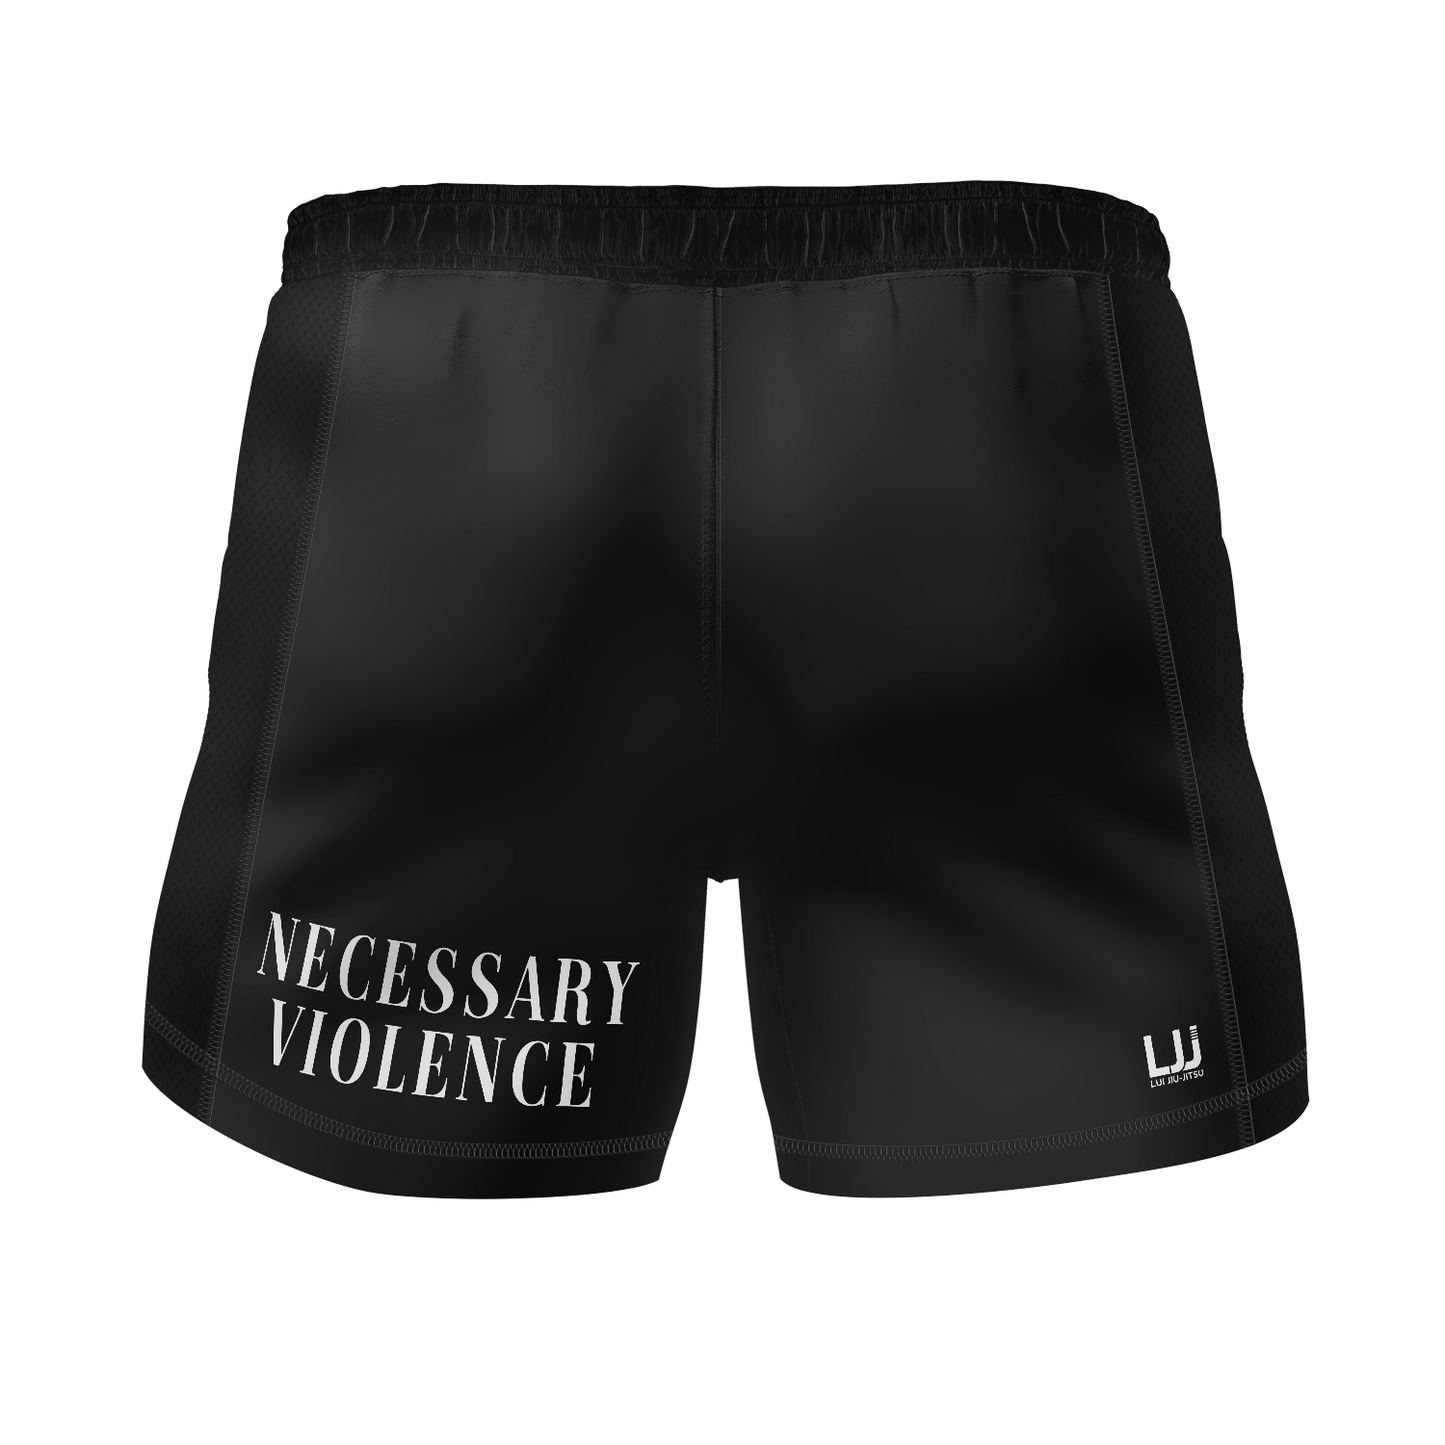 Lui Jiu Jitsu men's fight shorts Necessary Violence, black